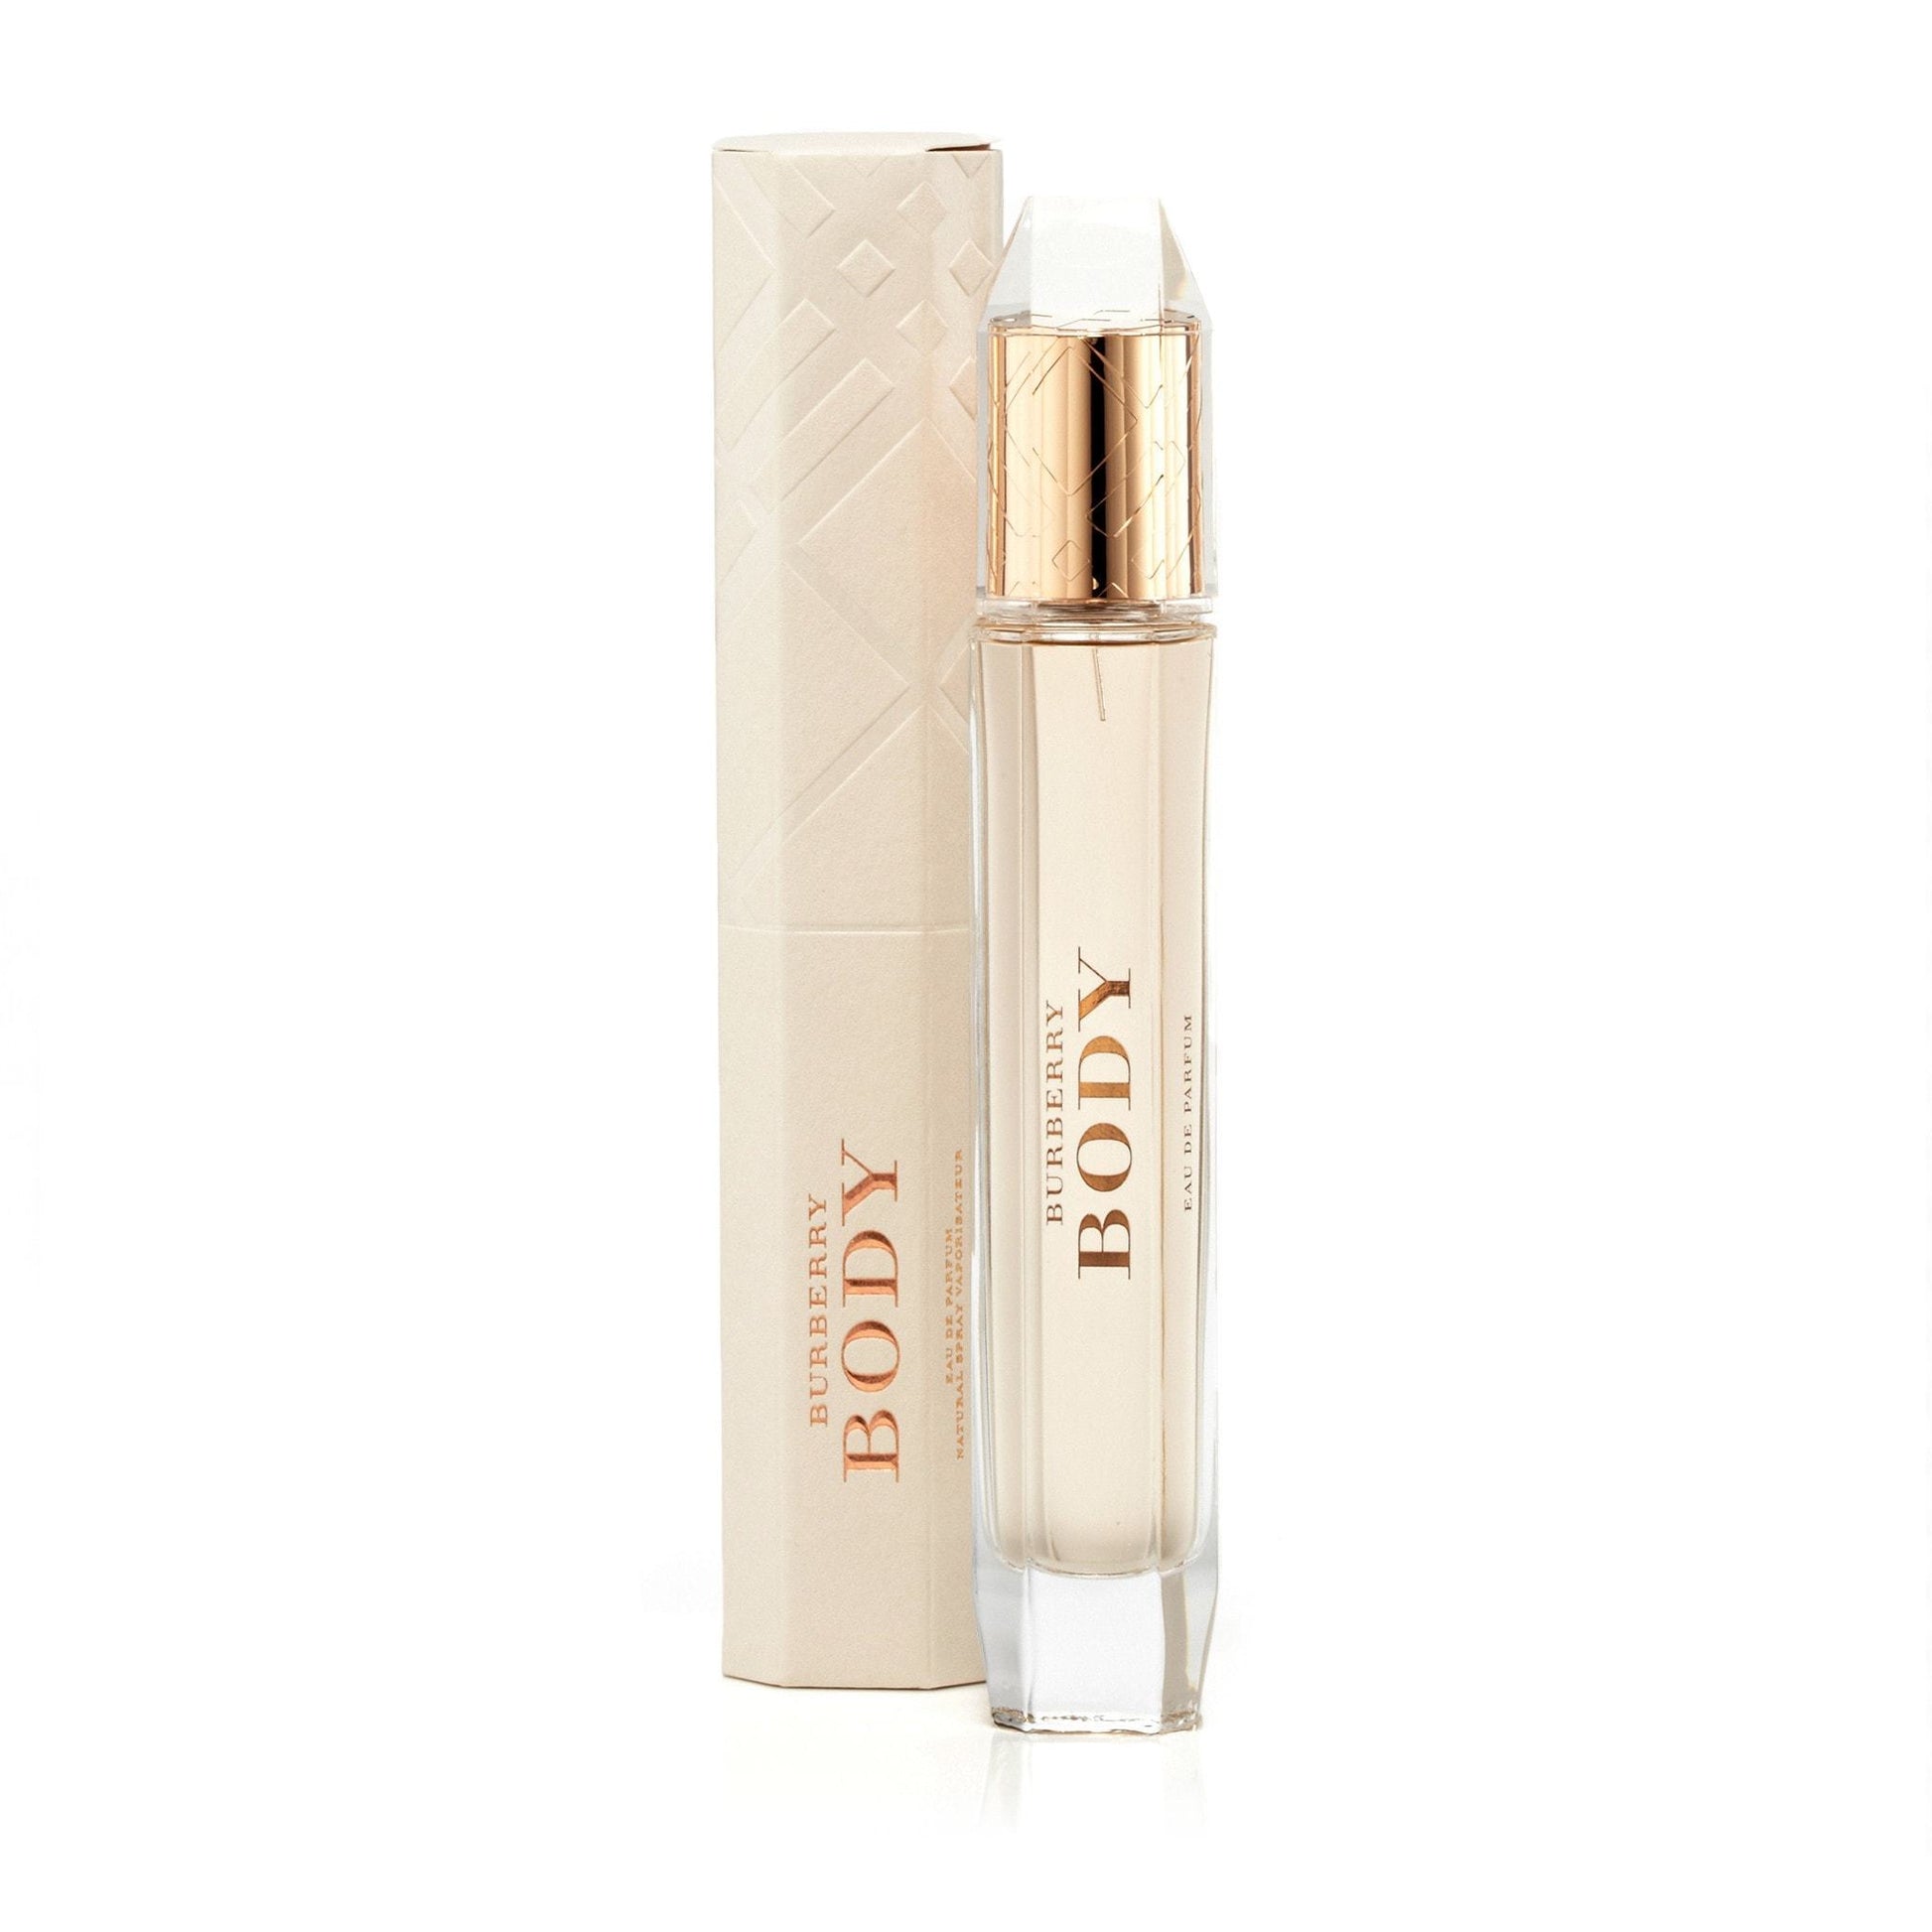 Body Eau de Parfum Spray for Women by Burberry, Product image 1